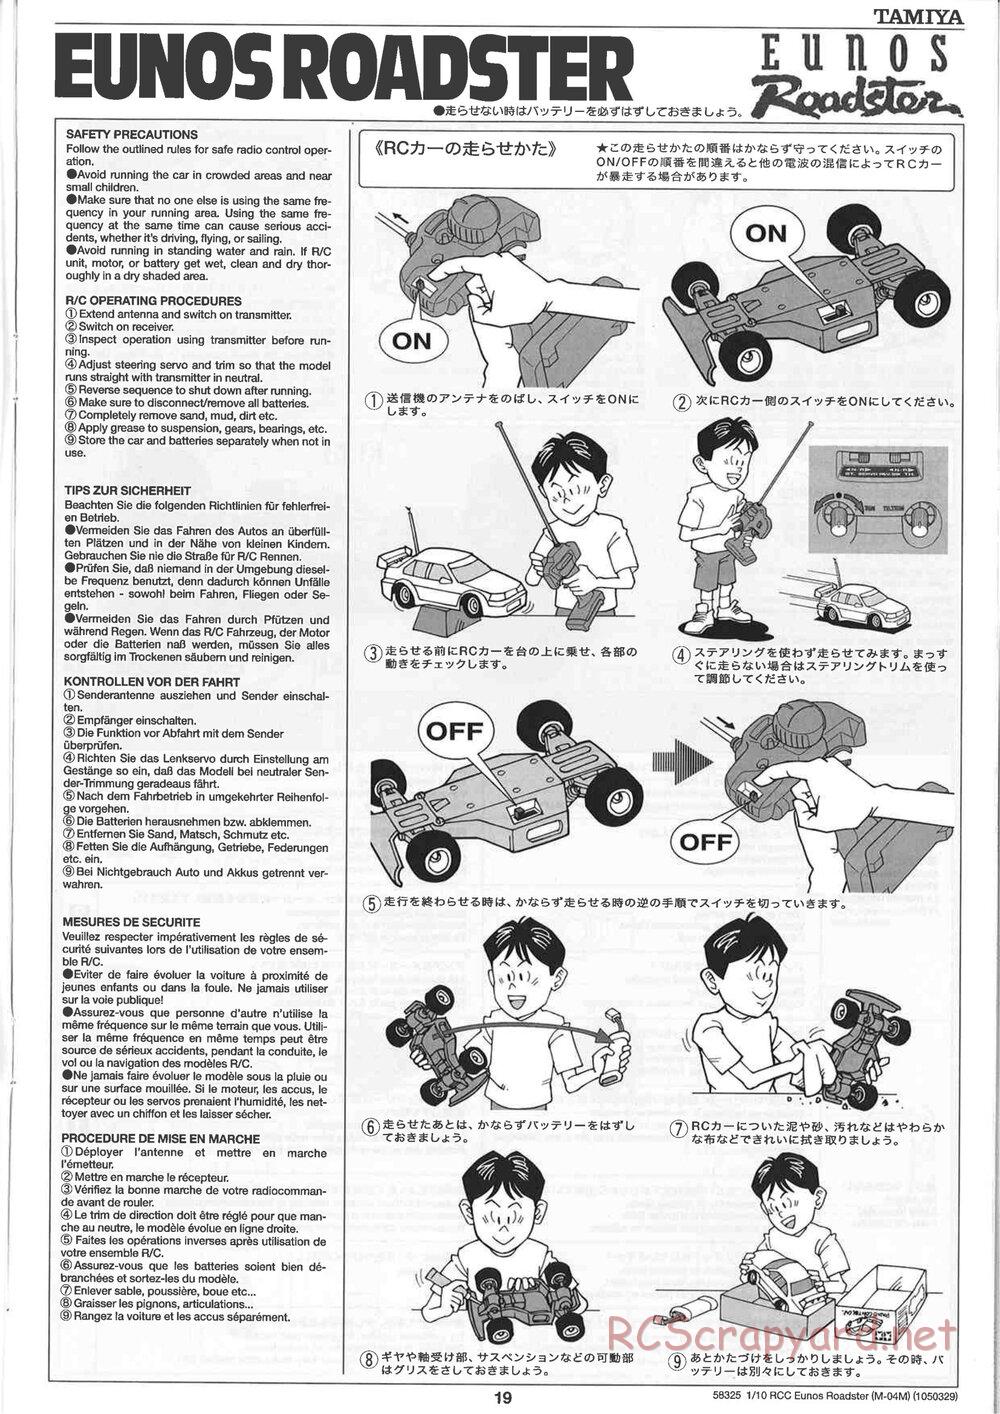 Tamiya - Eunos Roadster - M04M Chassis - Manual - Page 19